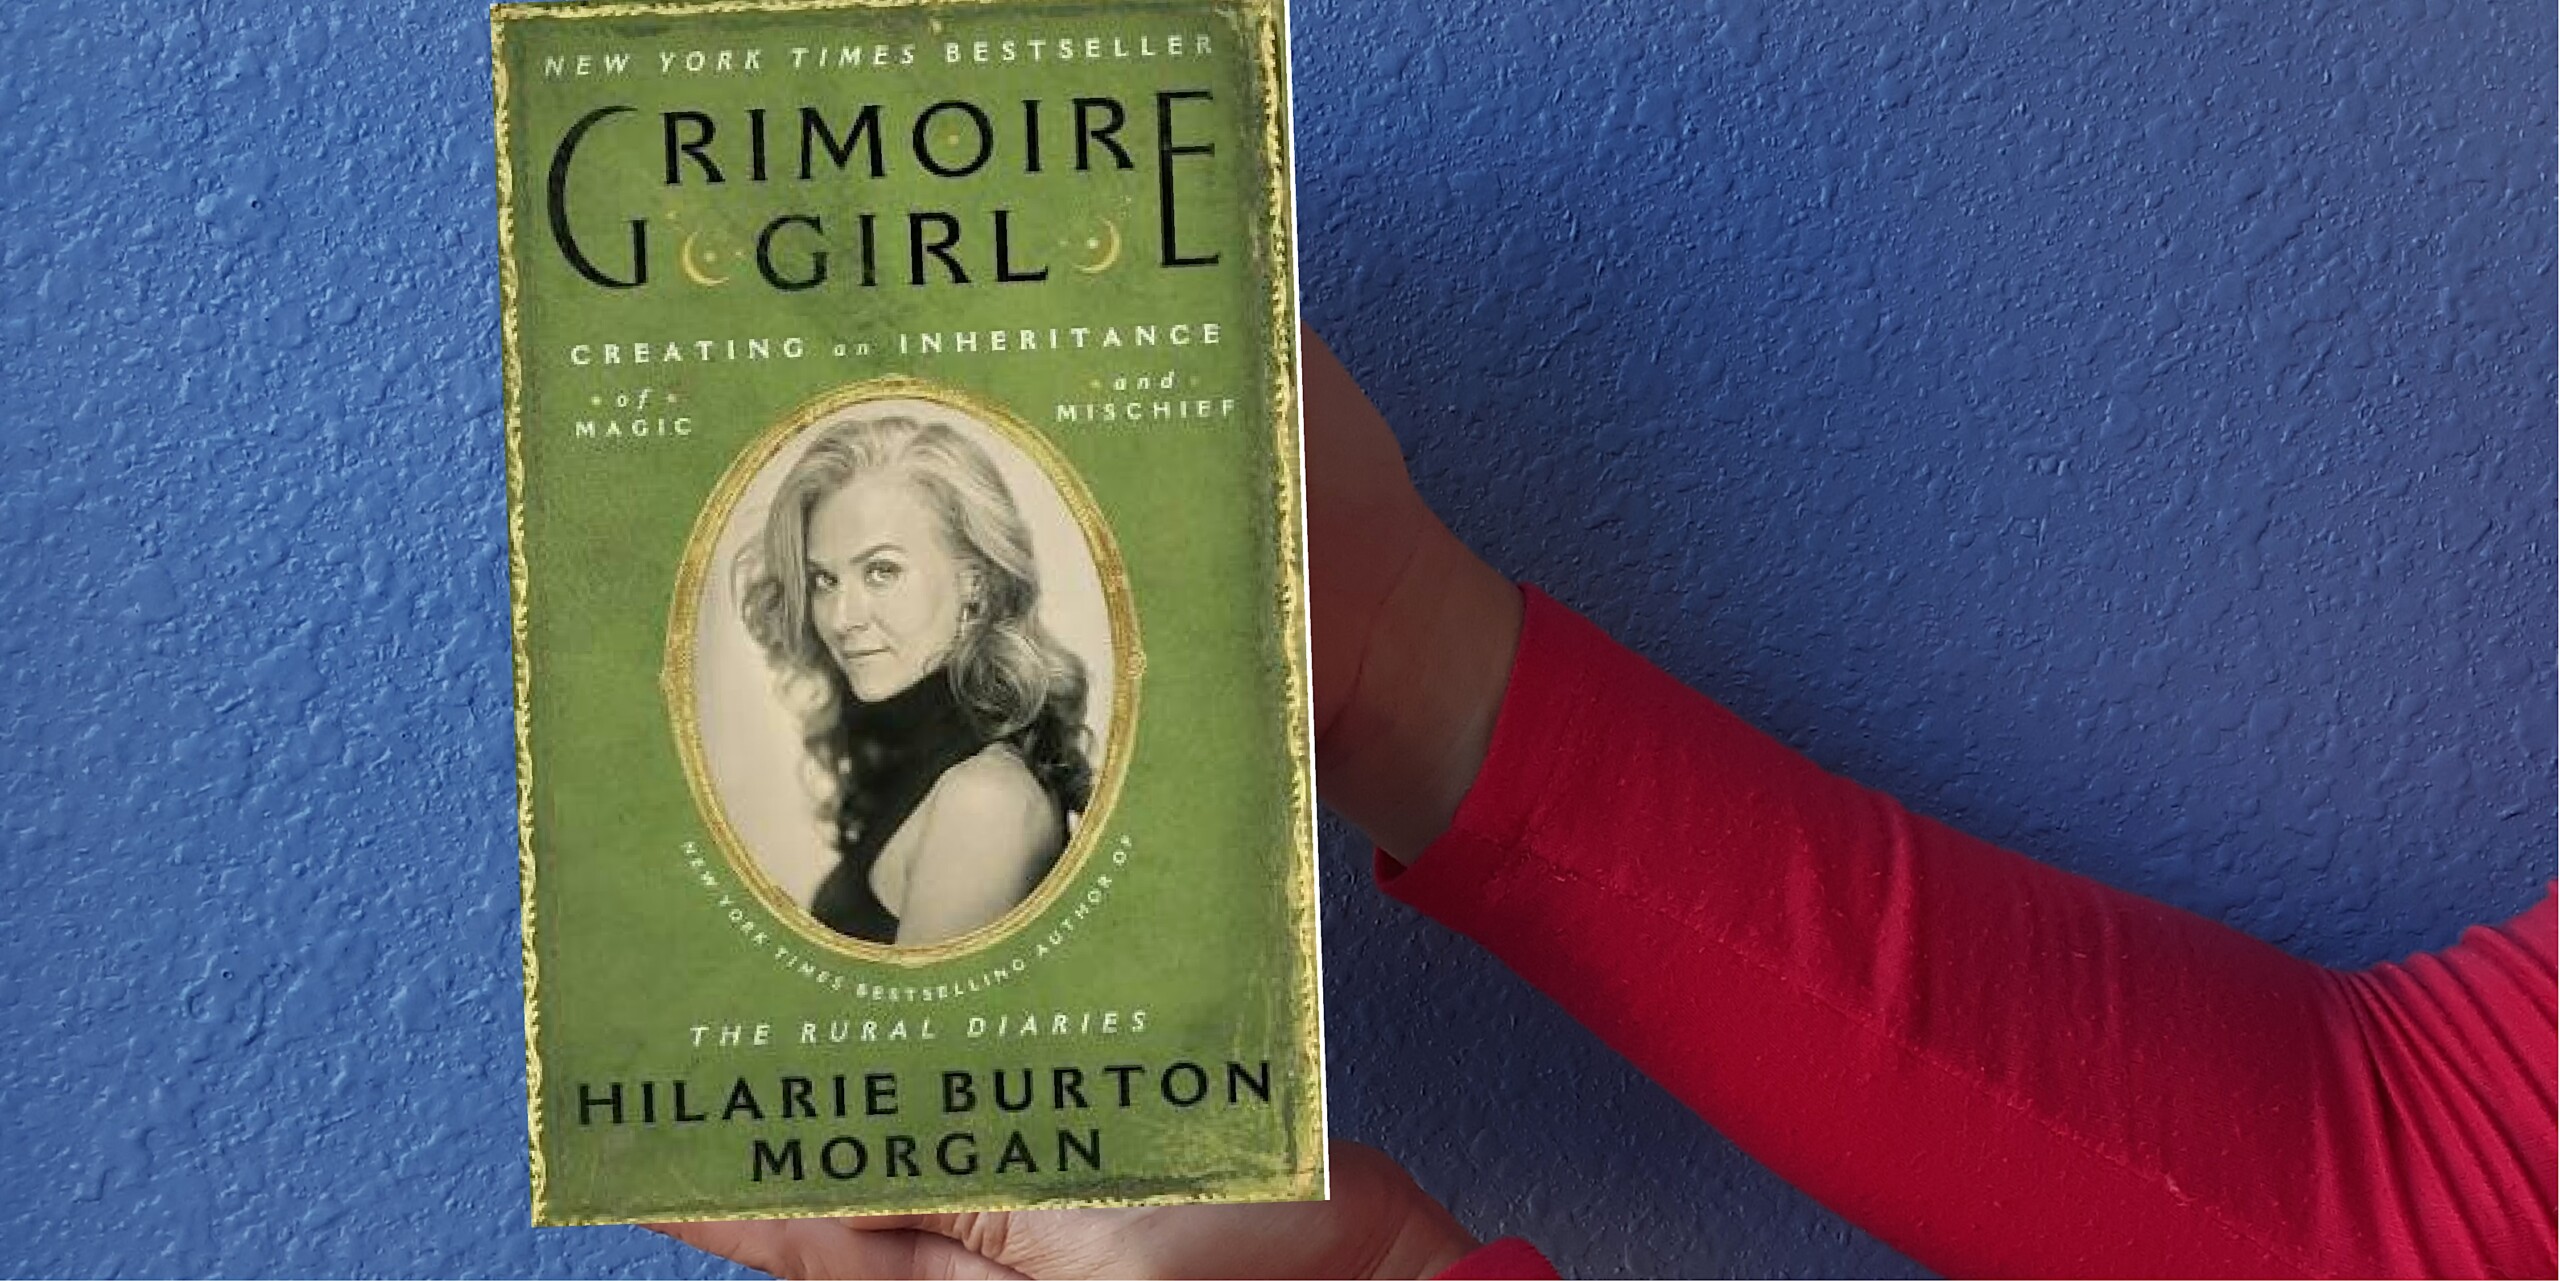 What’s Next? Book Club: Grimoire Girl by Hilarie Burton Morgan